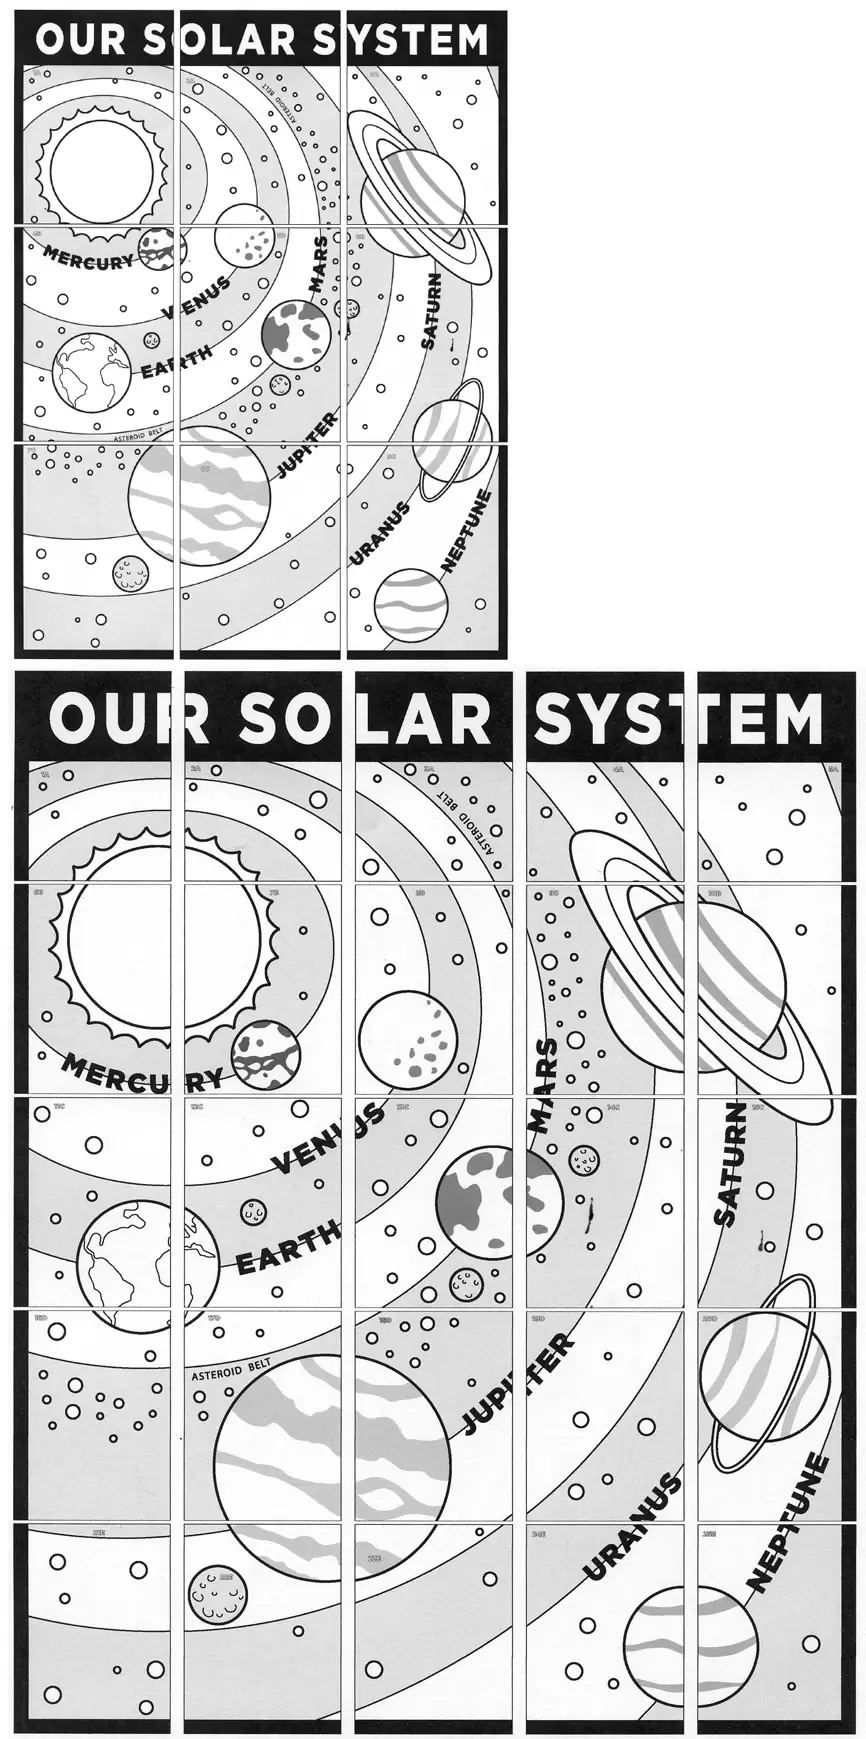 Solar system mural